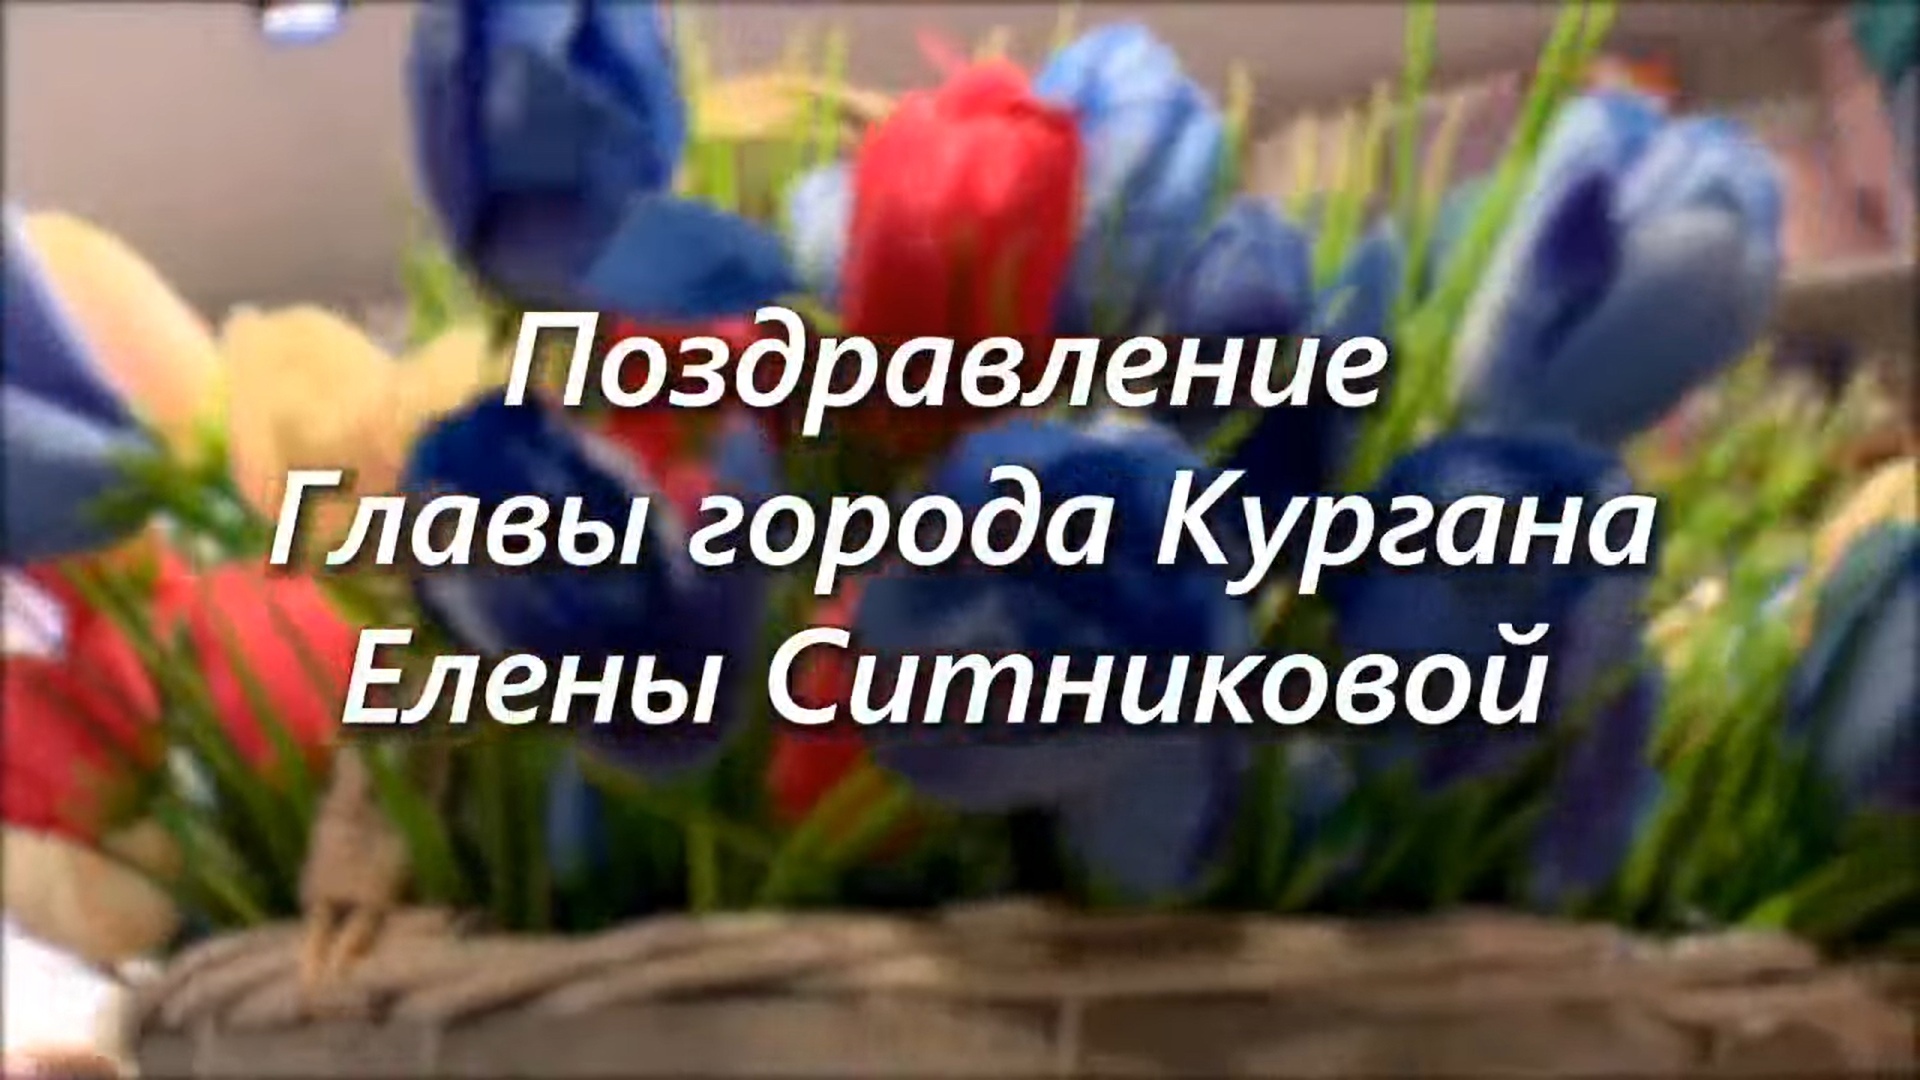 Глава города Кургана Елена Ситникова поздравила женщин с 8 Марта